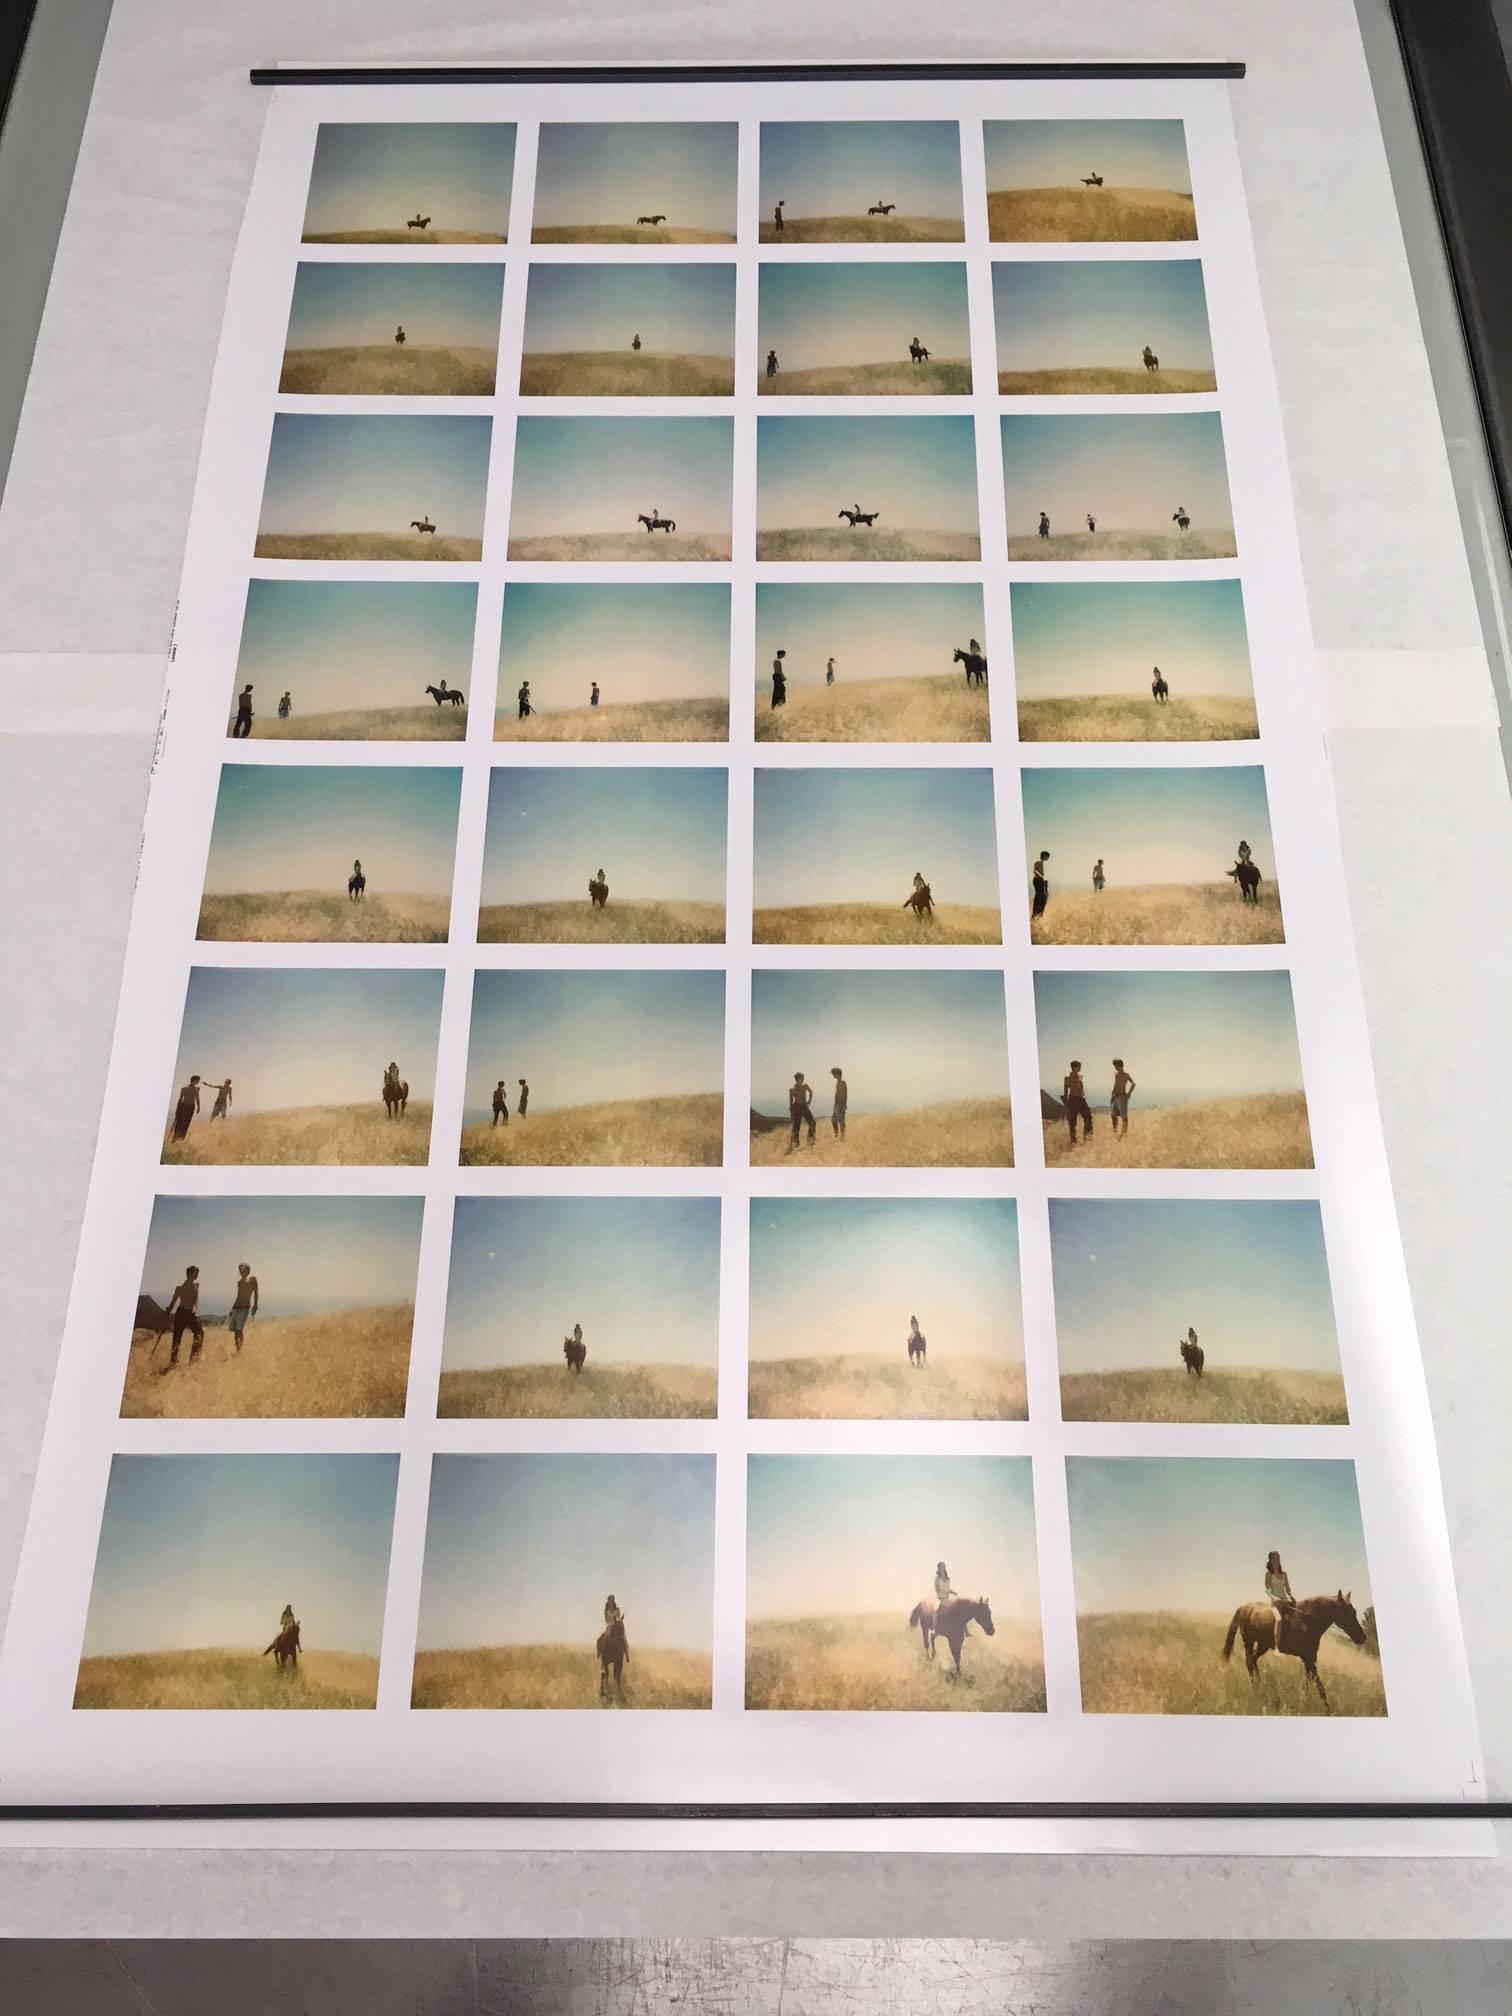 Renée's Dream (29 PALMS, CA) - 114 x 67cm - smaller size - Polaroid, Contemporary - Photograph by Stefanie Schneider